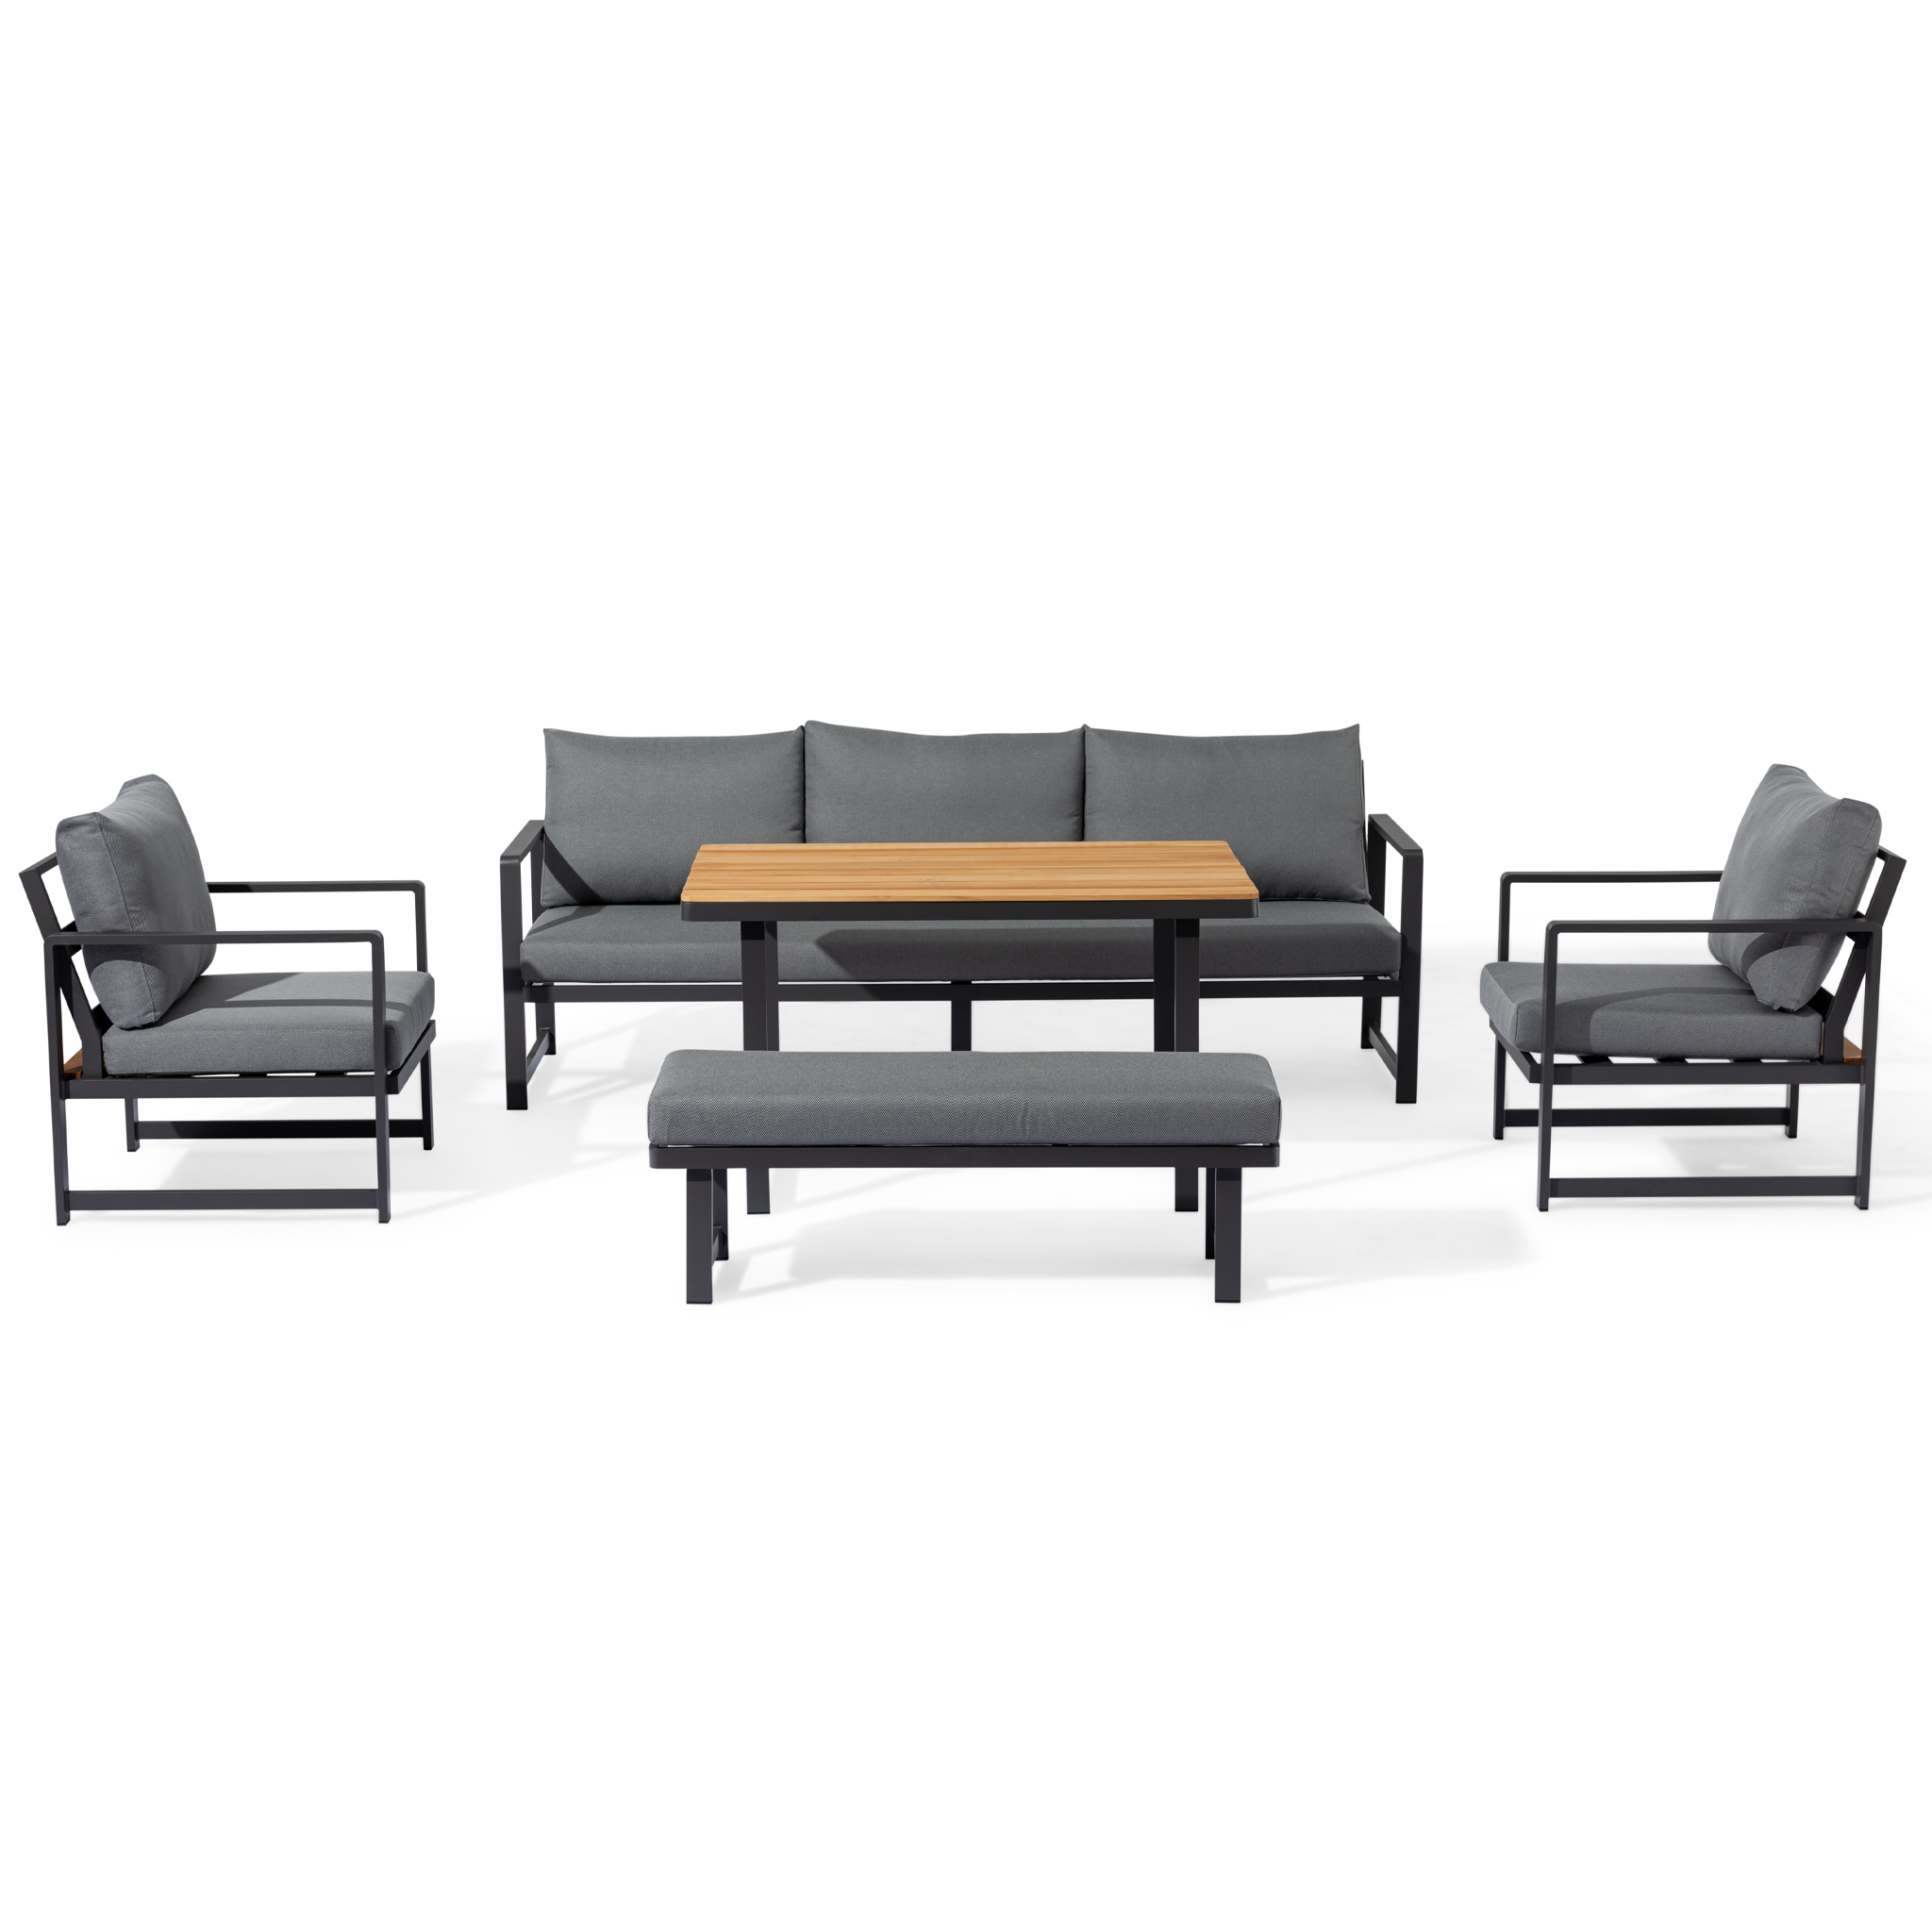 Cordoba 3 Seat Sofa Dining Set with Teak Table in Grey